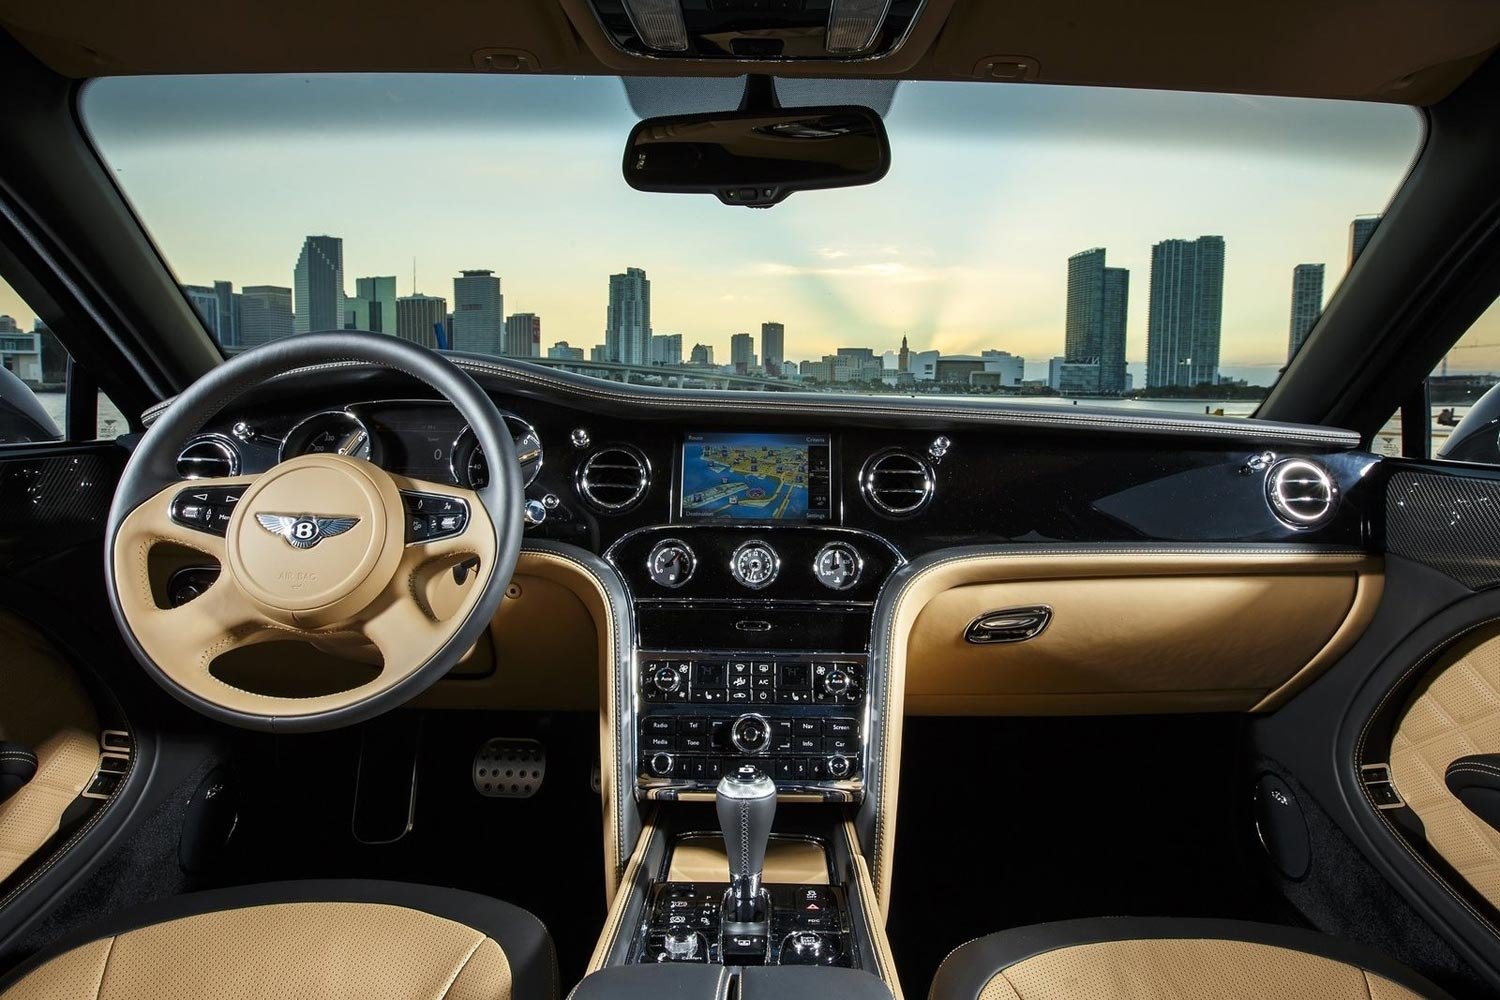 Cars inside. Bentley Mulsanne 2017 салон. Bentley Mulsanne Speed салон. Интерьер Бентли Мюльзанна. Bentley Mulsanne салон.